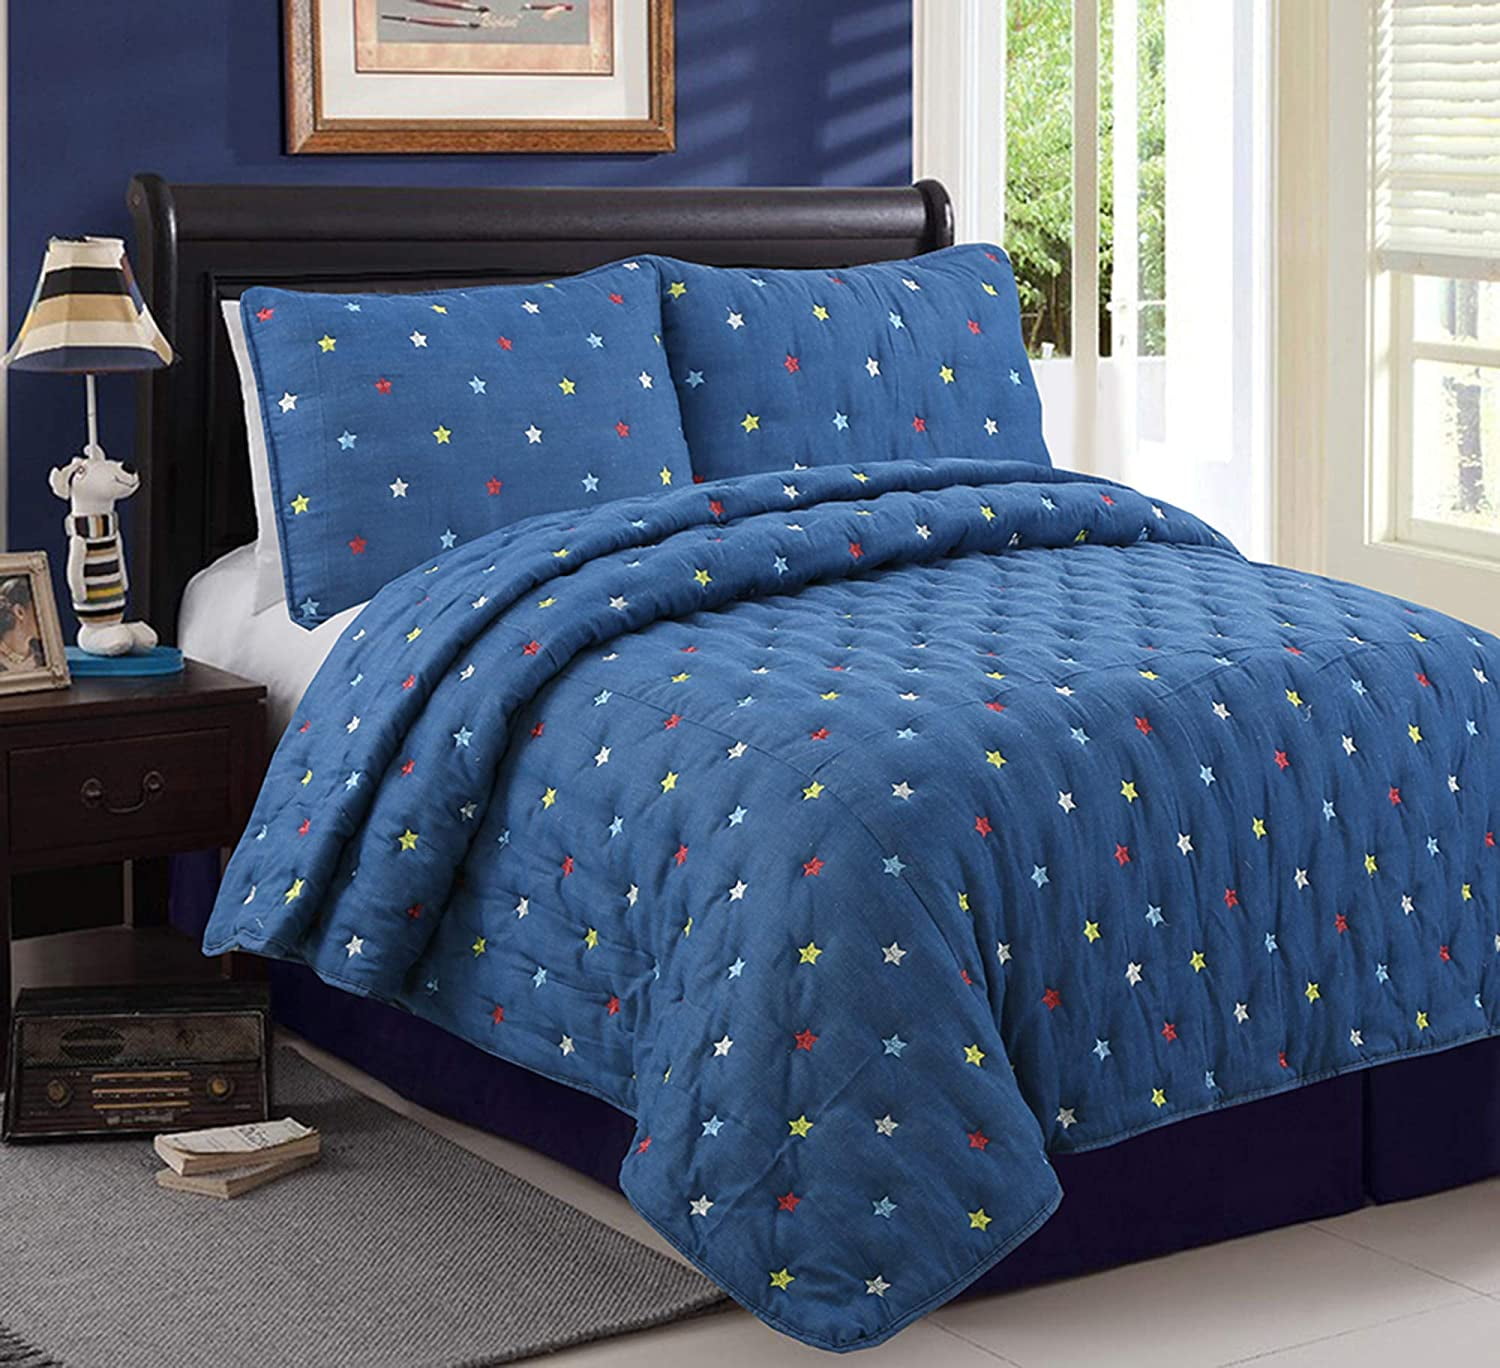 blue bedspreads